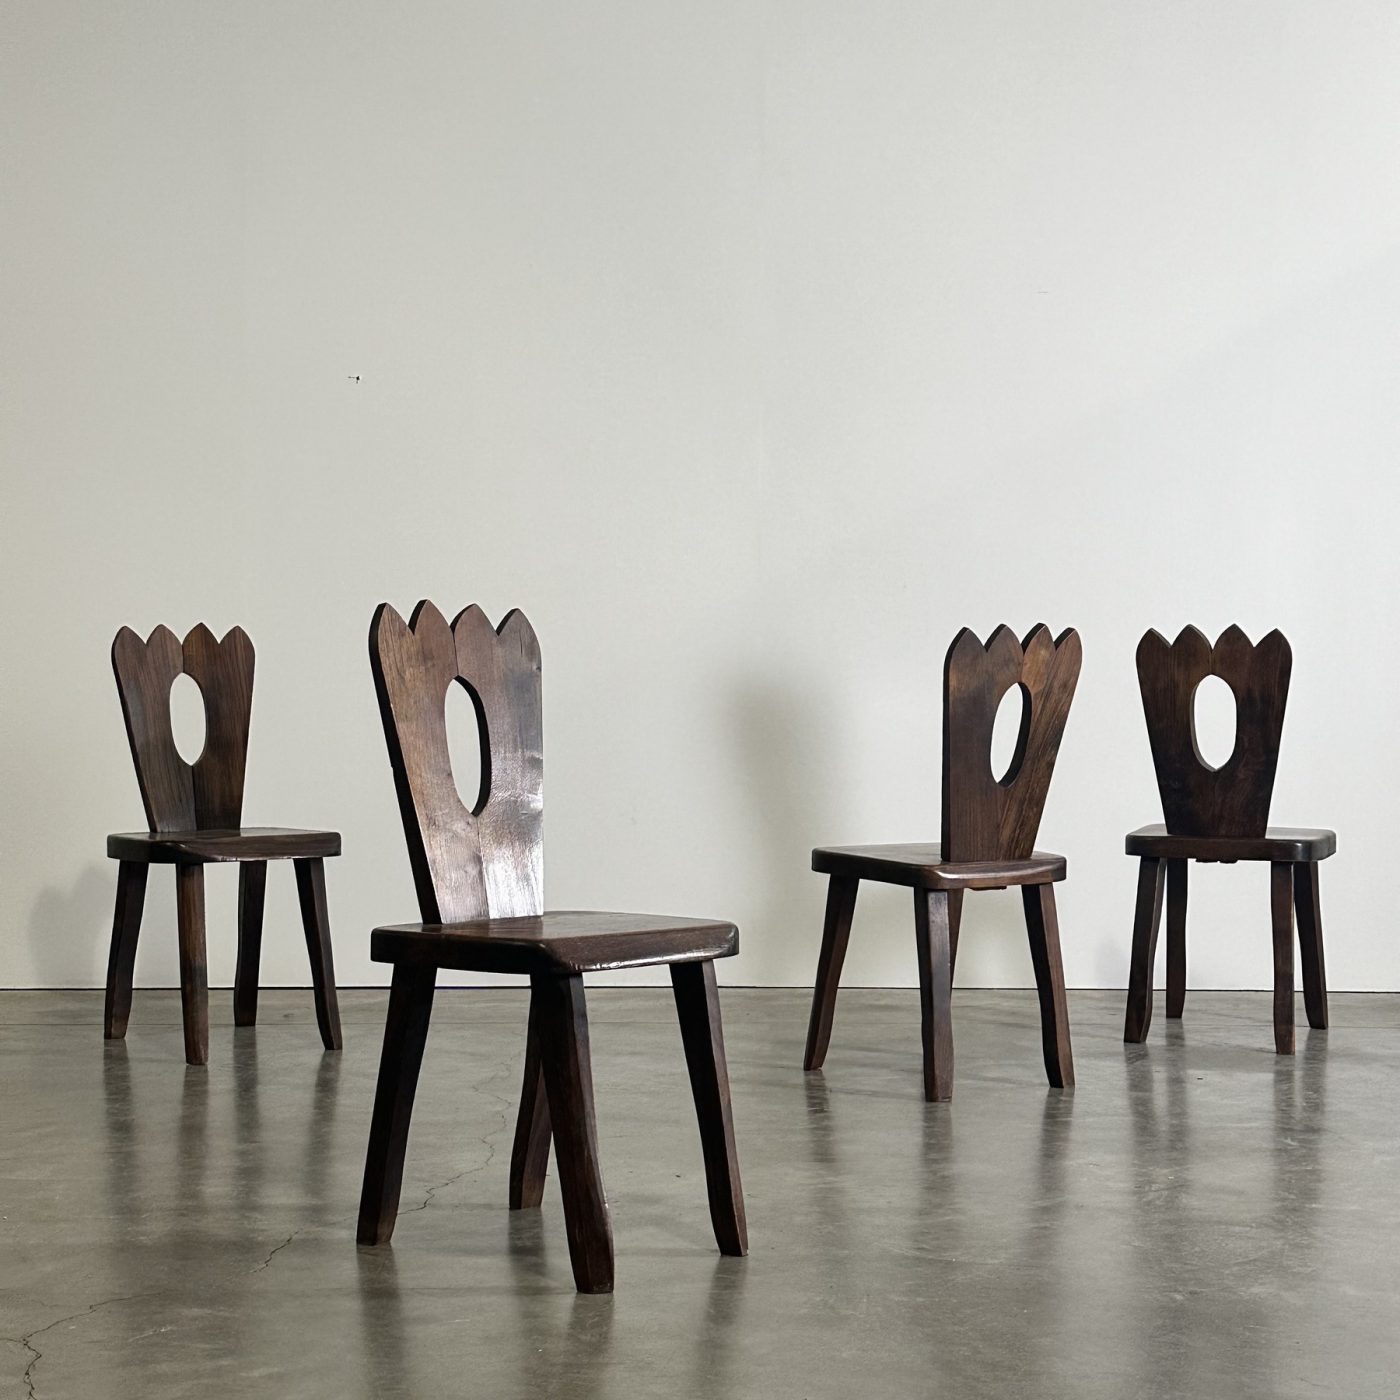 objet-vagabond-midcentury-chairs0000